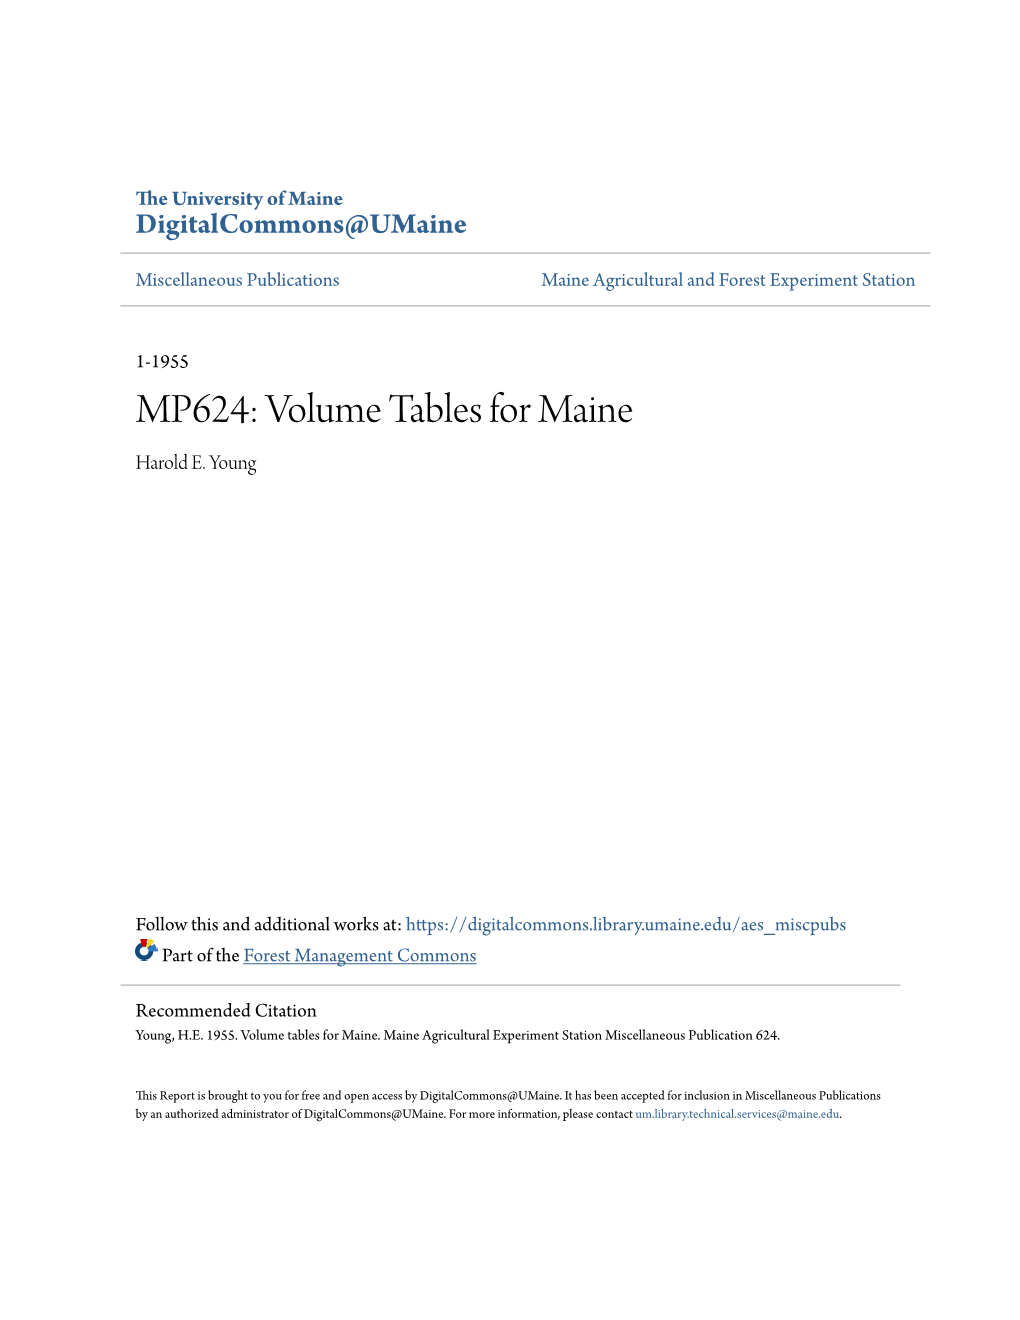 Volume Tables for Maine Harold E